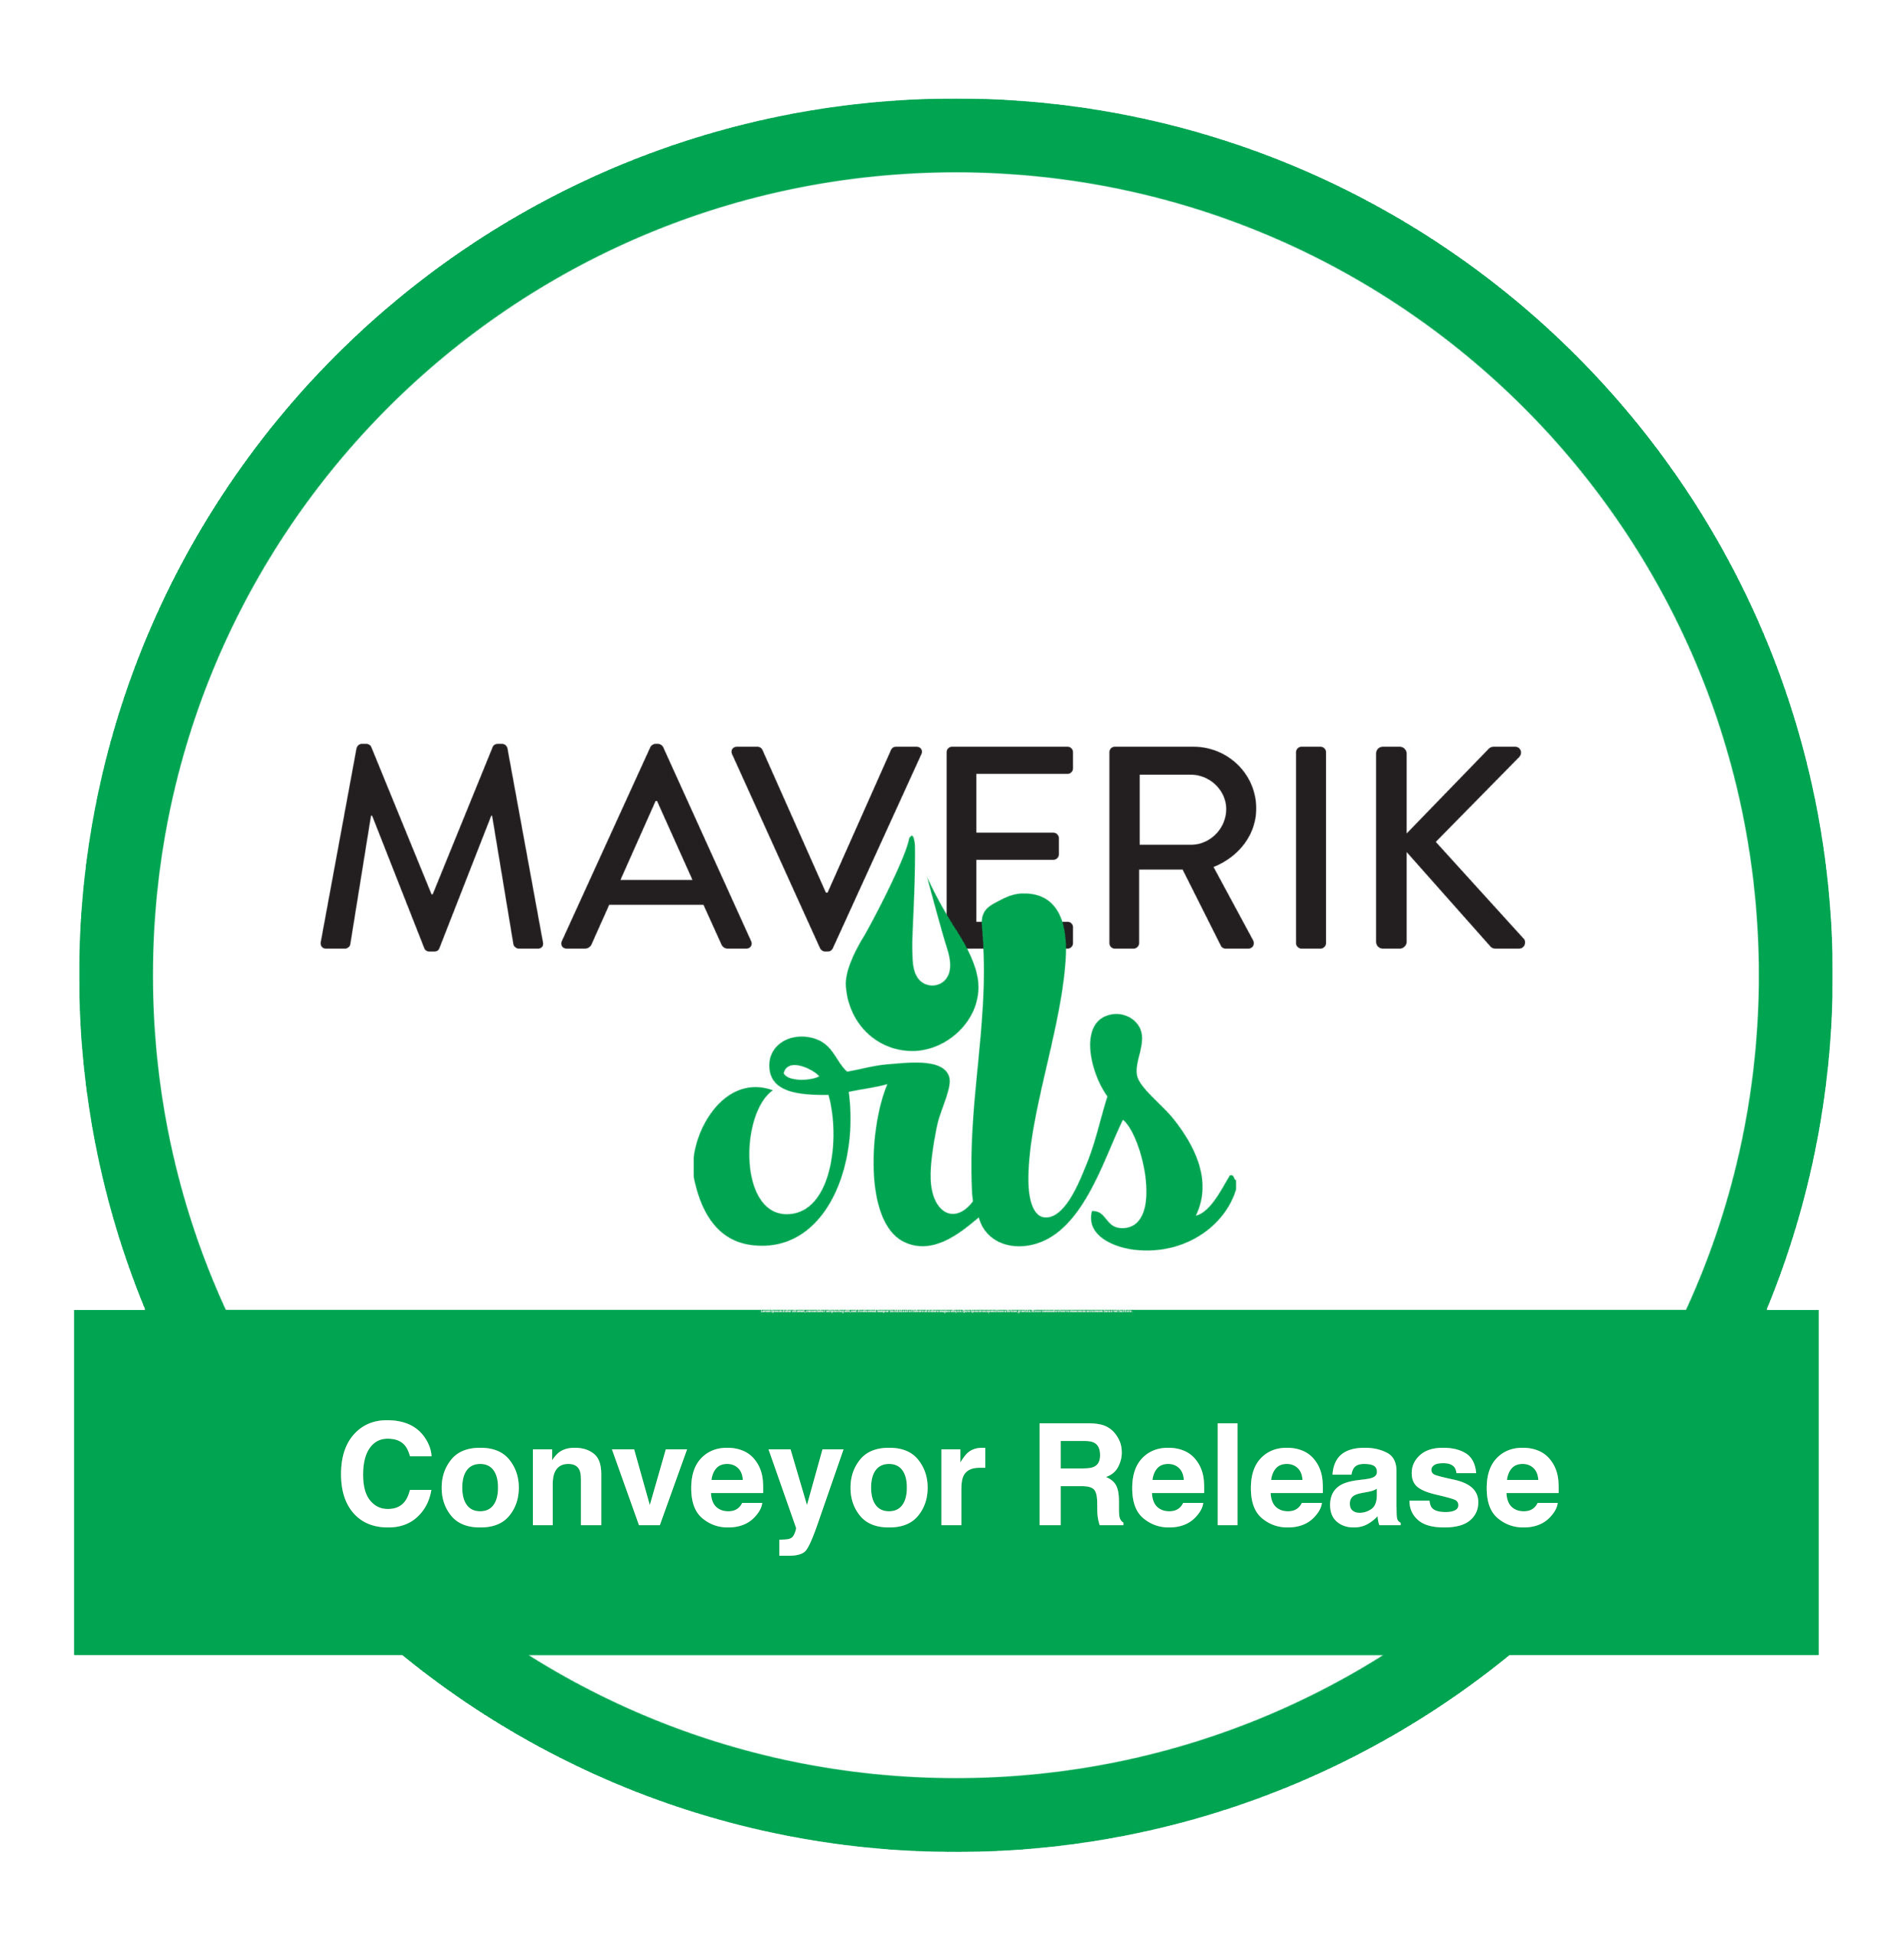 Conveyor Release